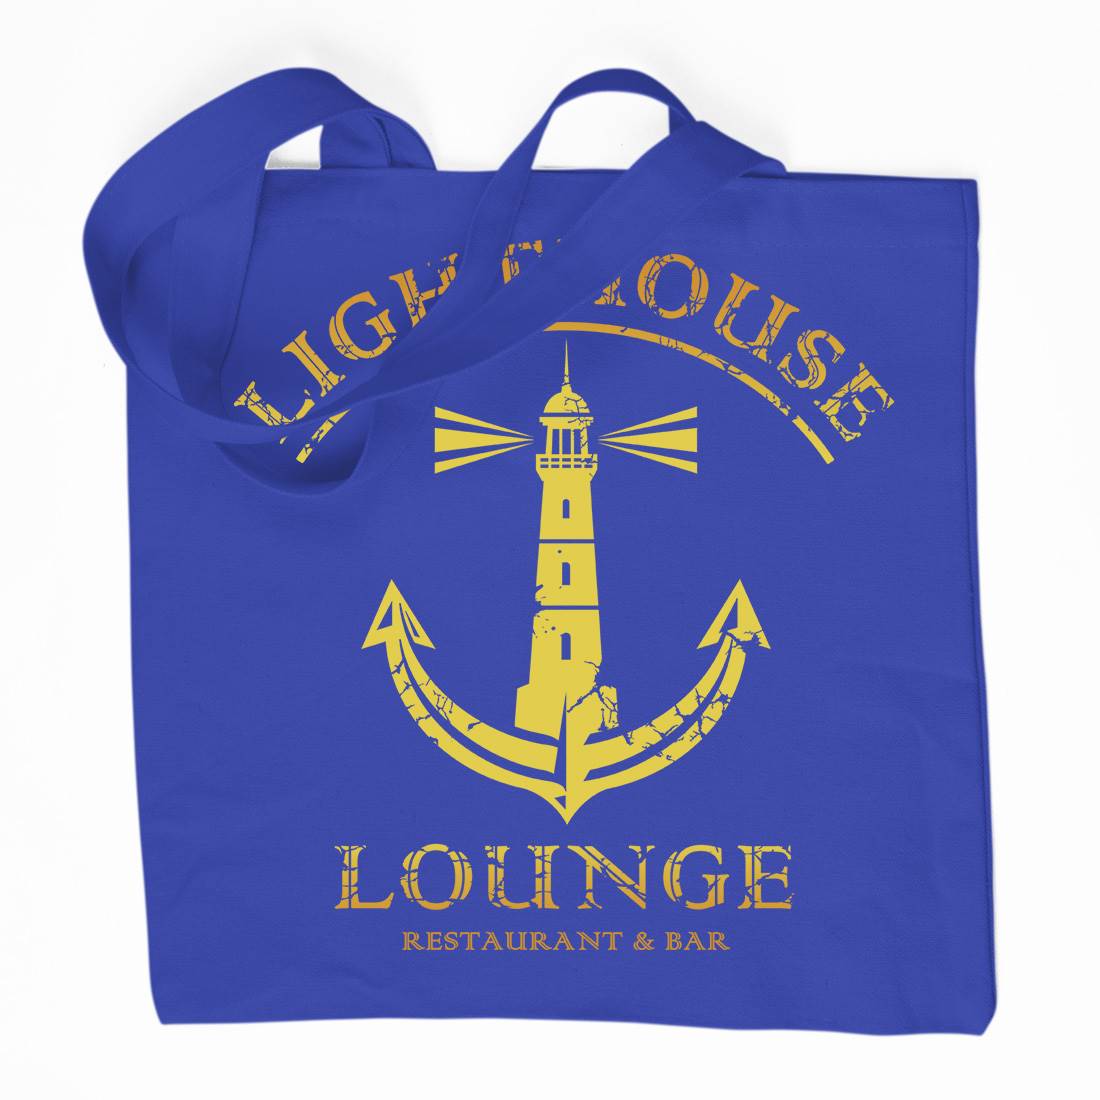 Lighthouse Lounge Organic Premium Cotton Tote Bag Horror D373